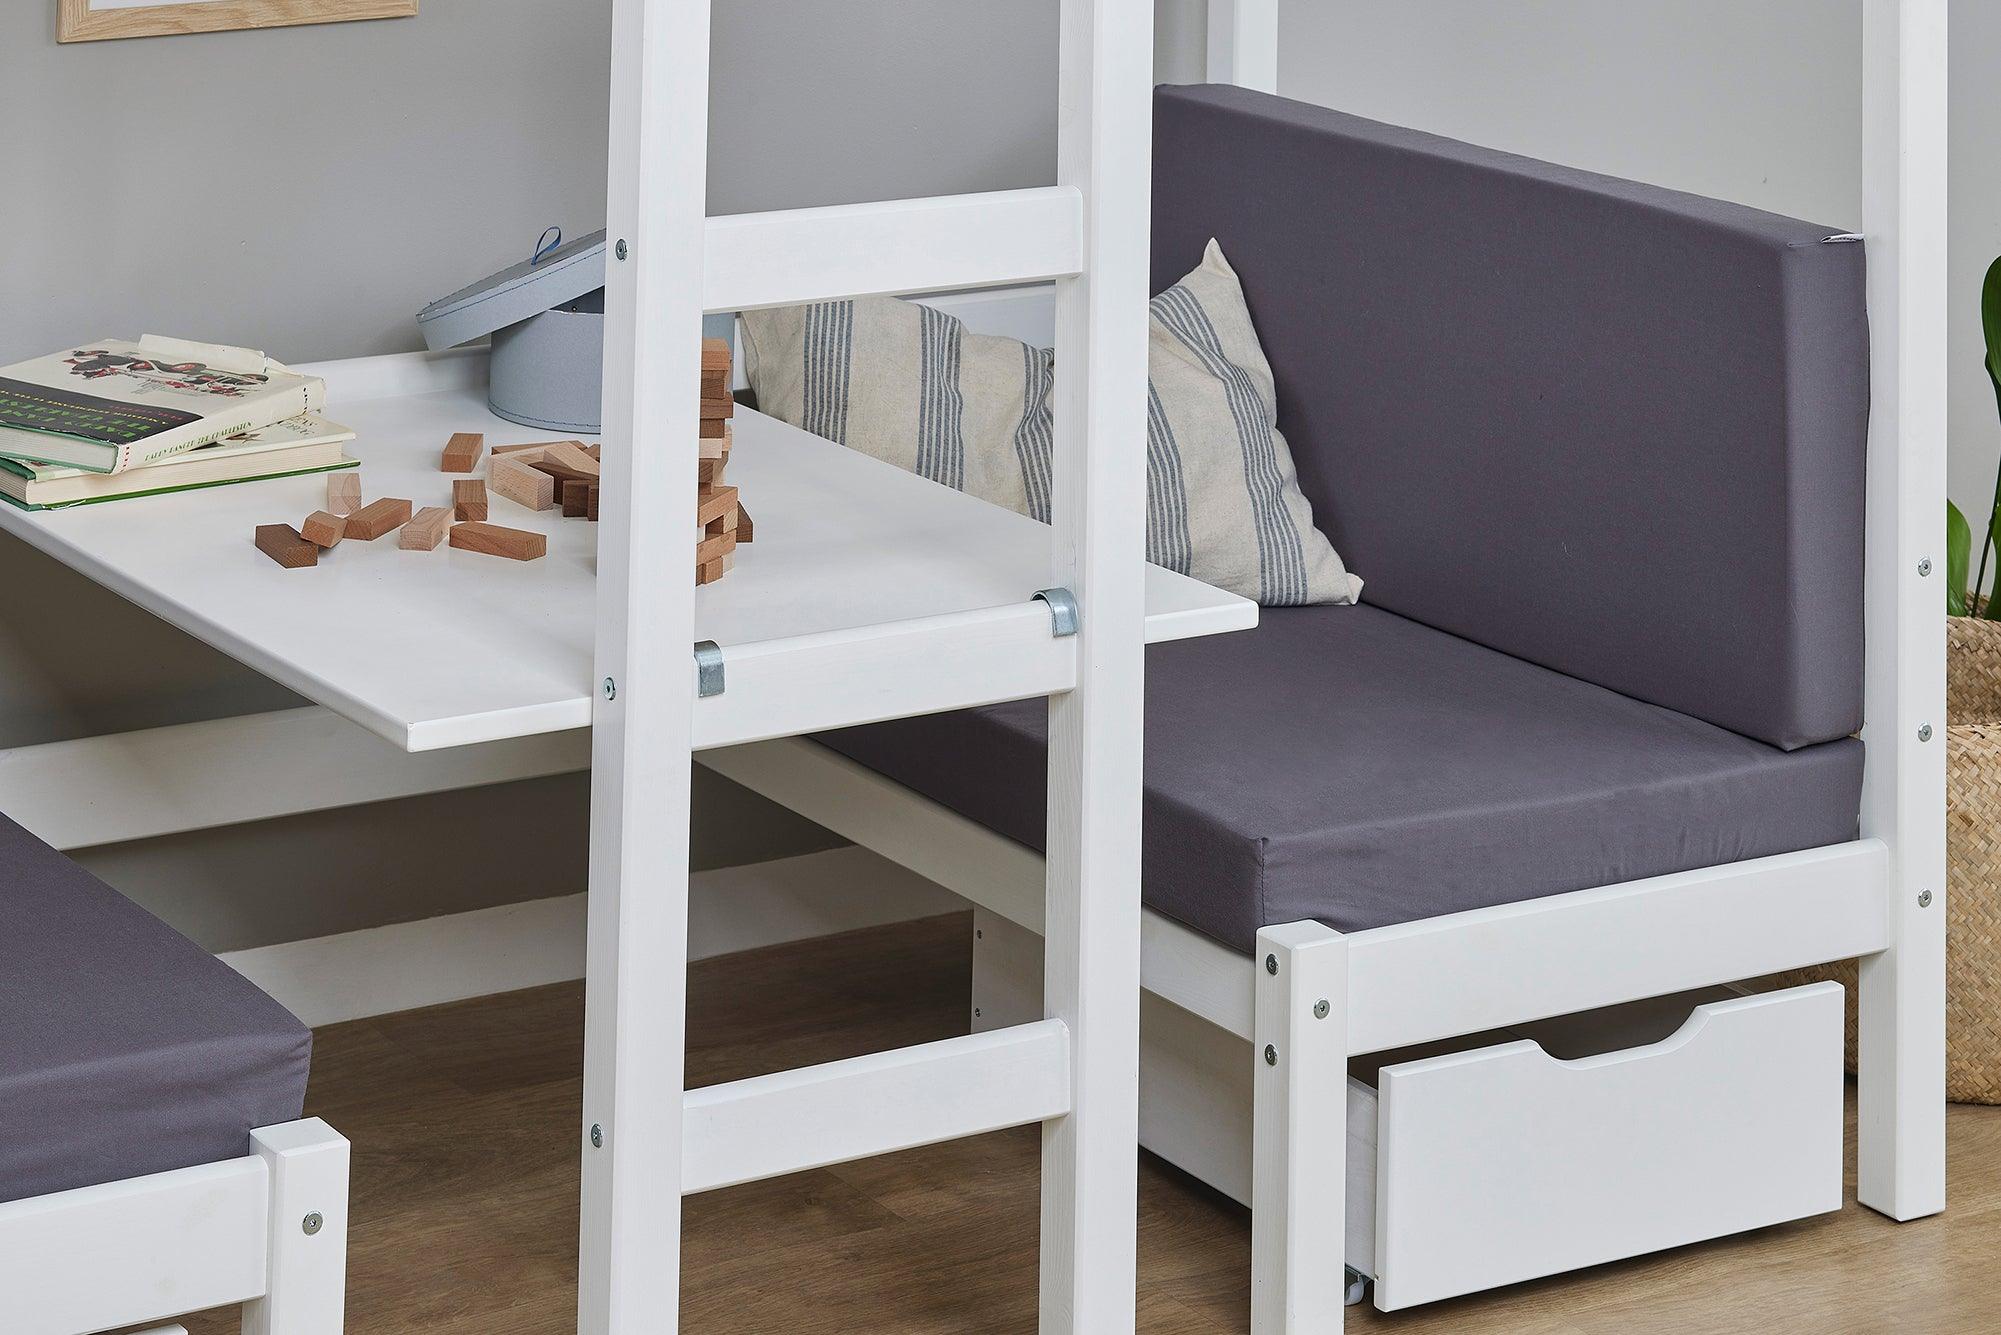 Bed package: Hoppekids ECO Dream Jumbo bed